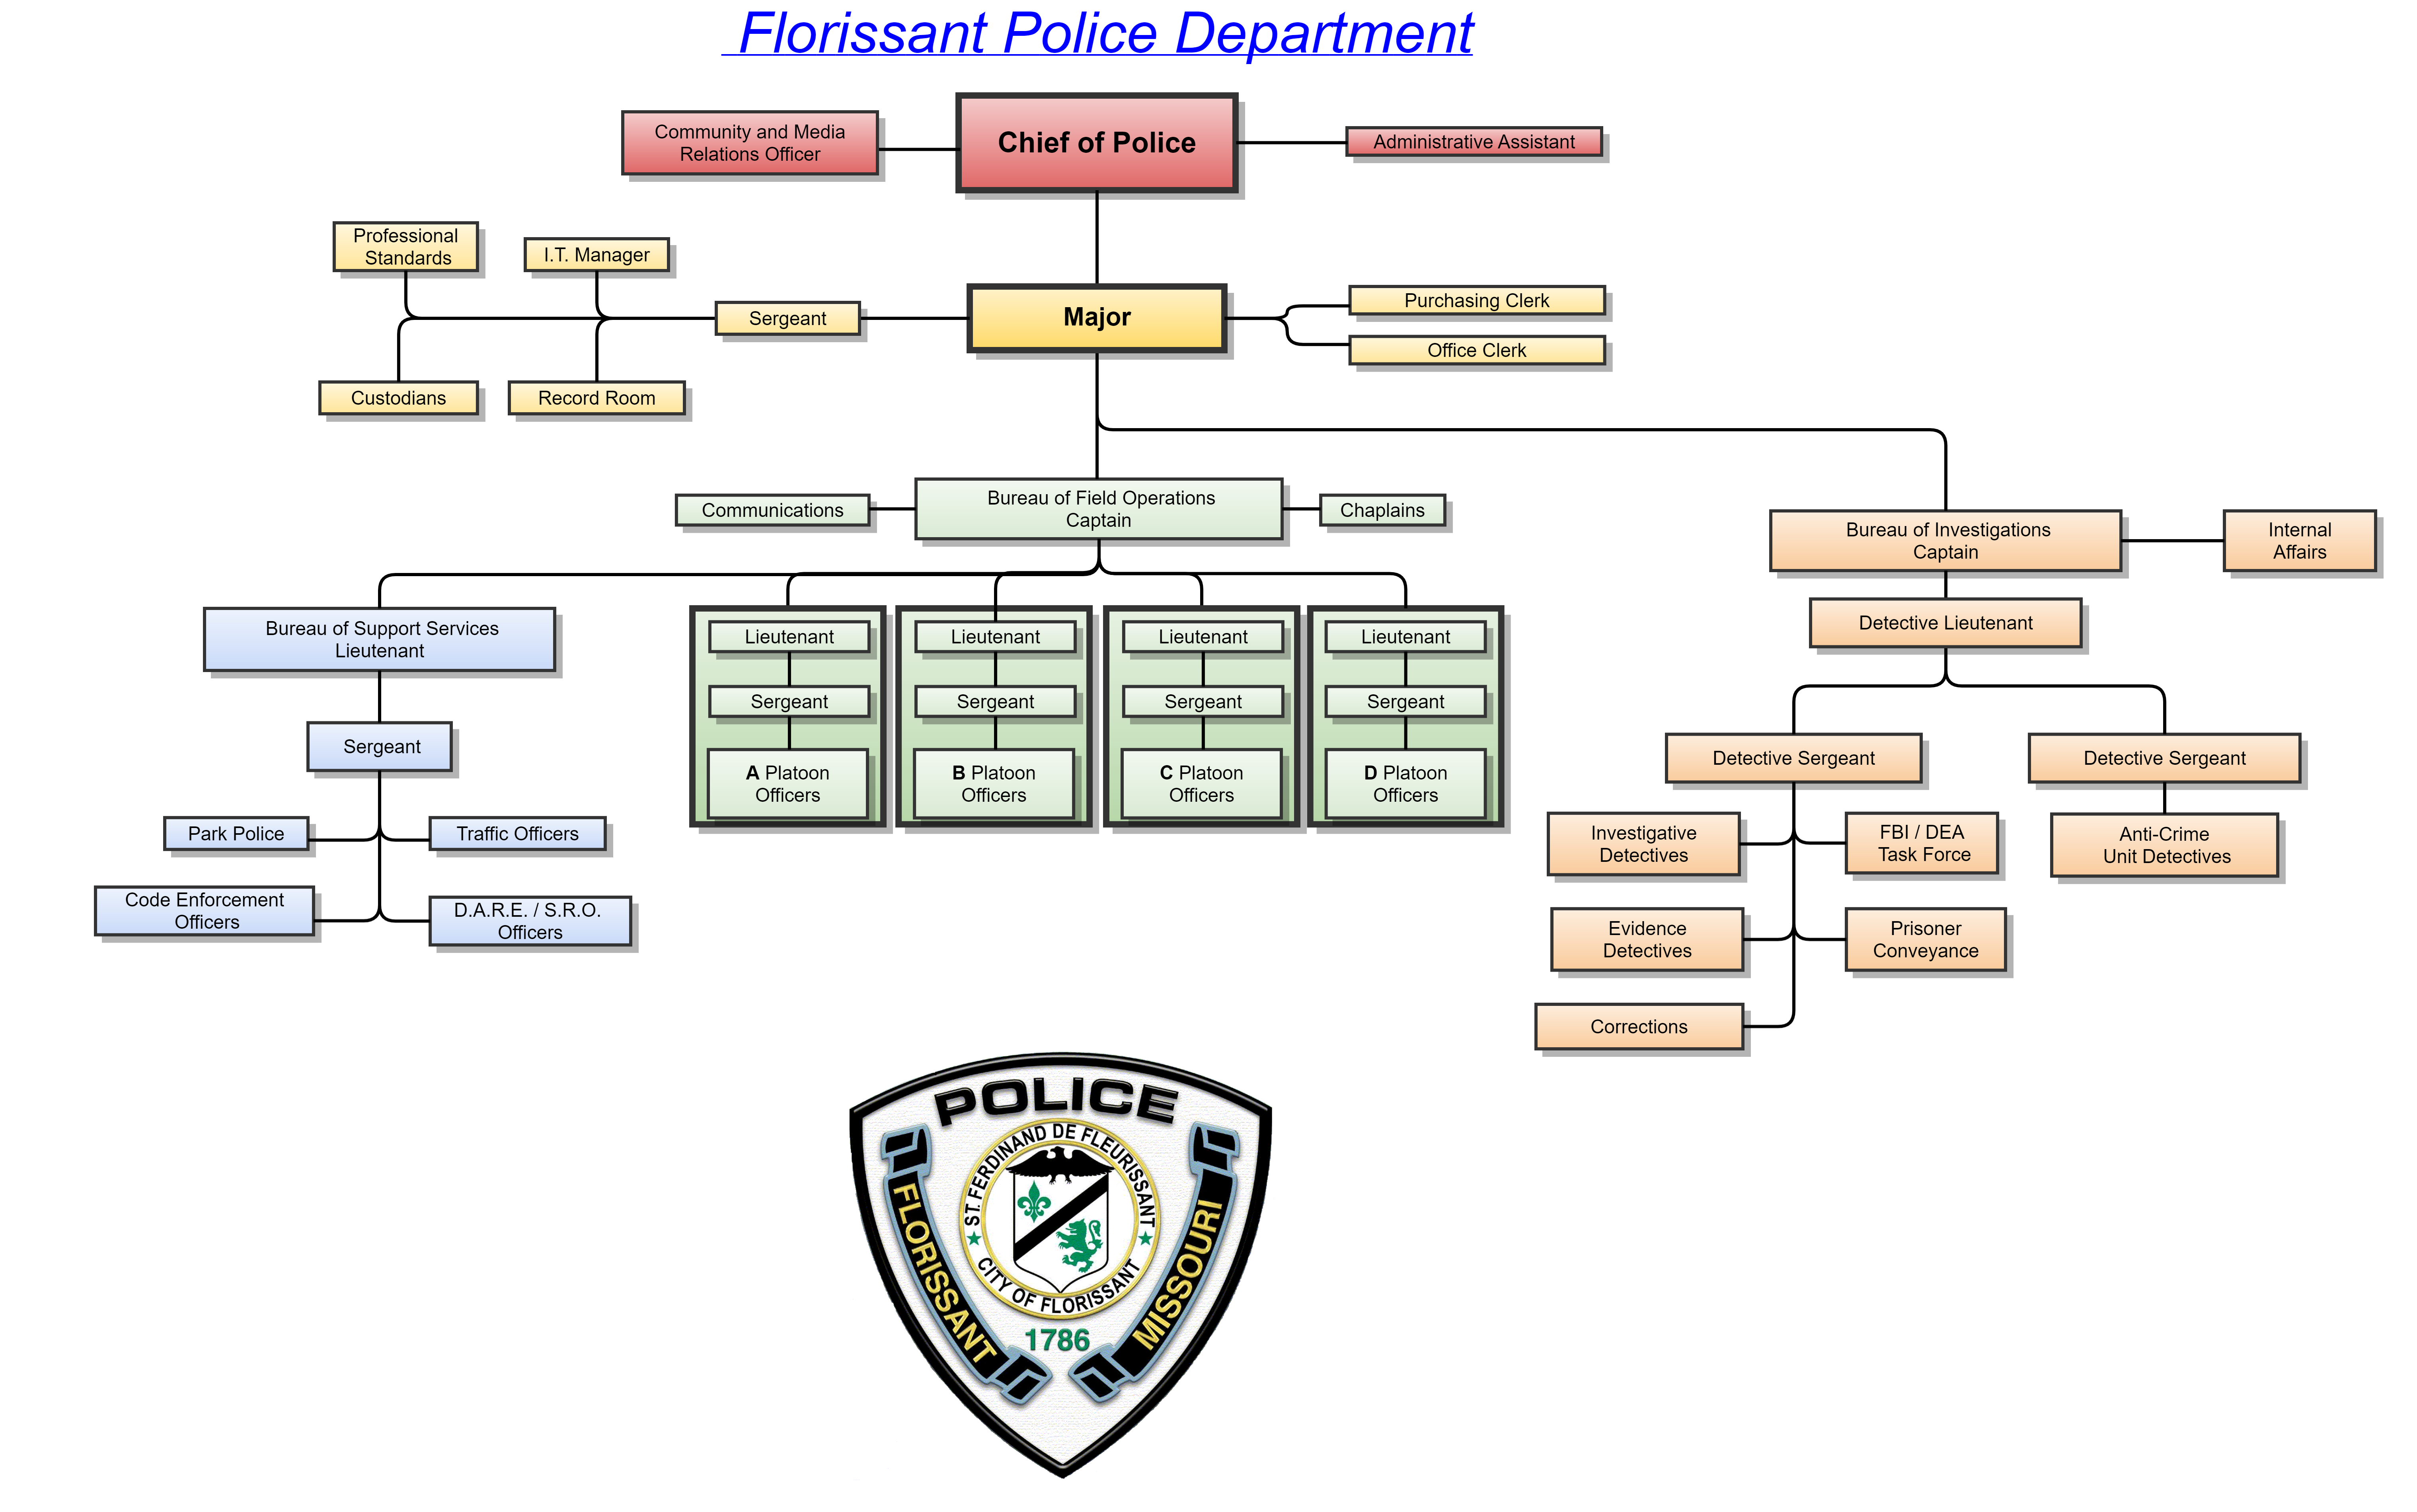 FPD_Org_Chart